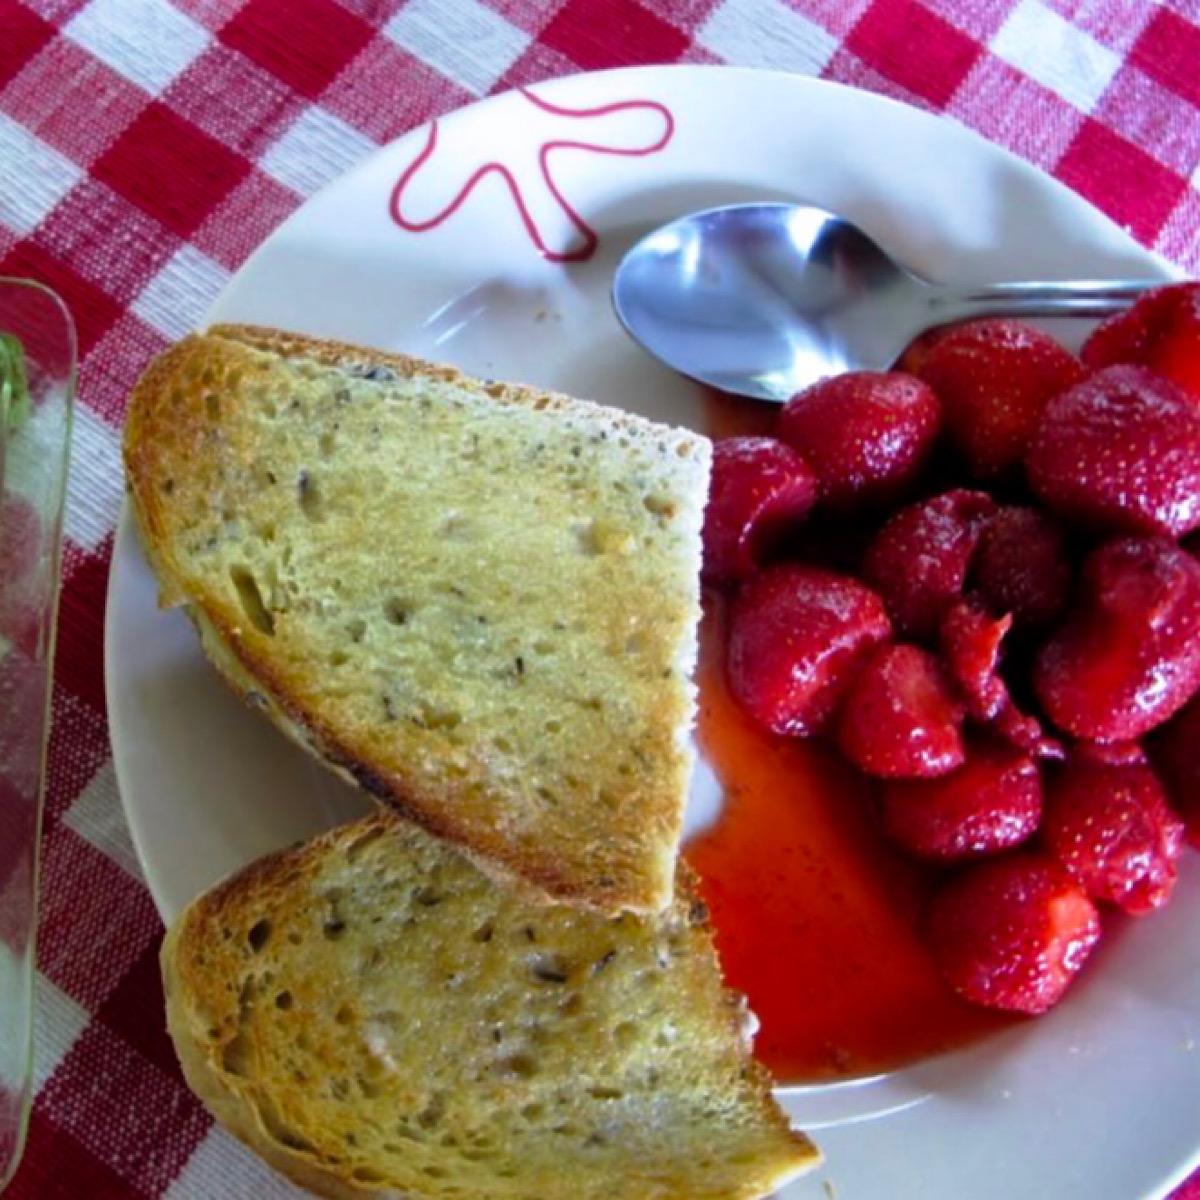 Fresh strawberries with balsamic vinegar sauce on breakfast plate